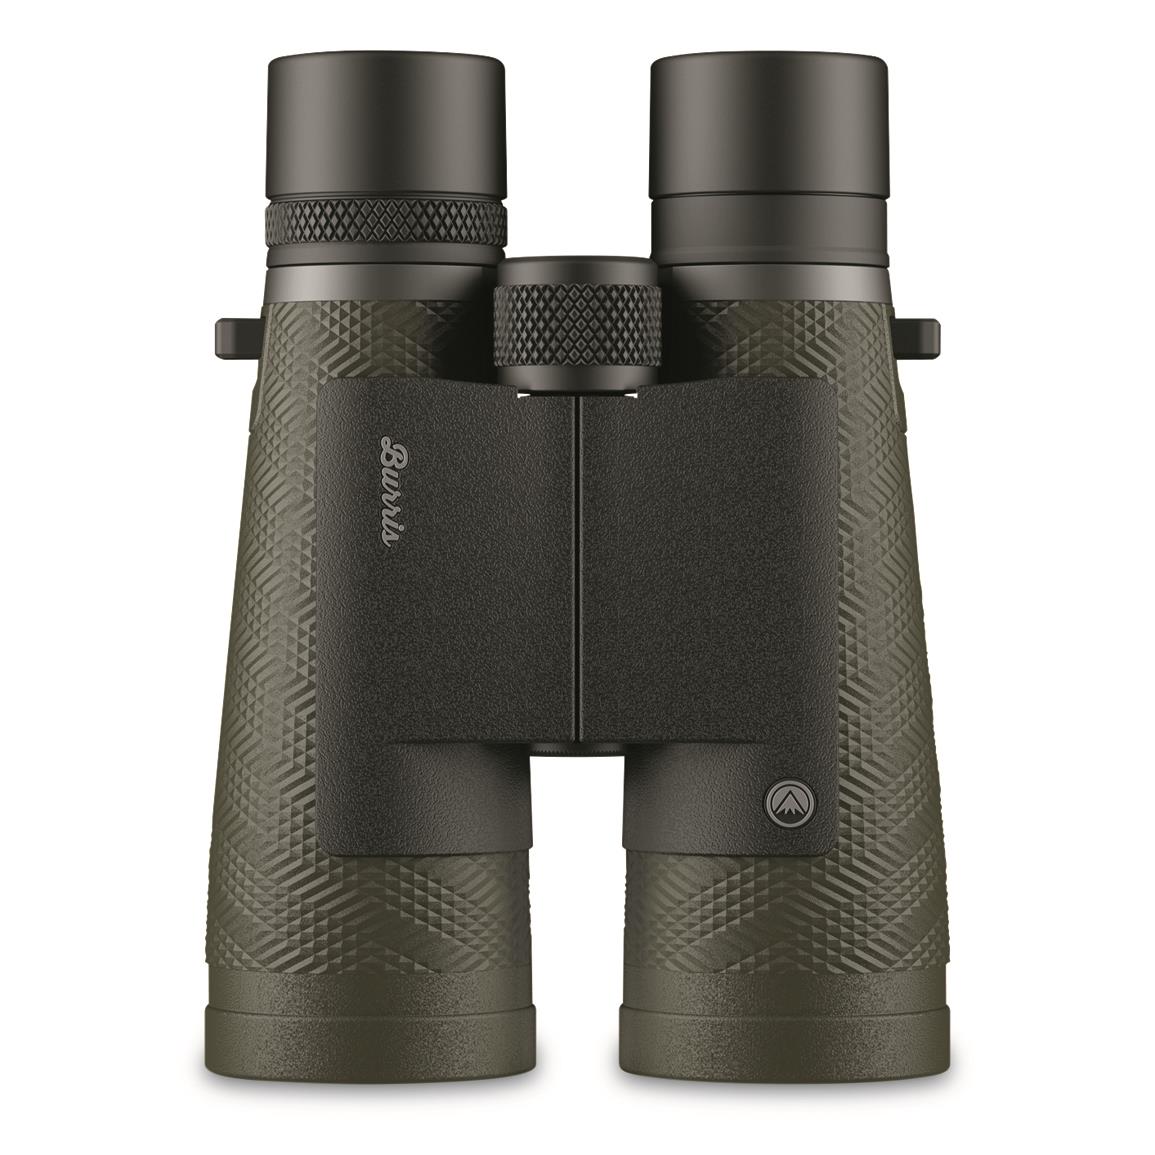 Burris Signature HD 15x56mm Binoculars, Green